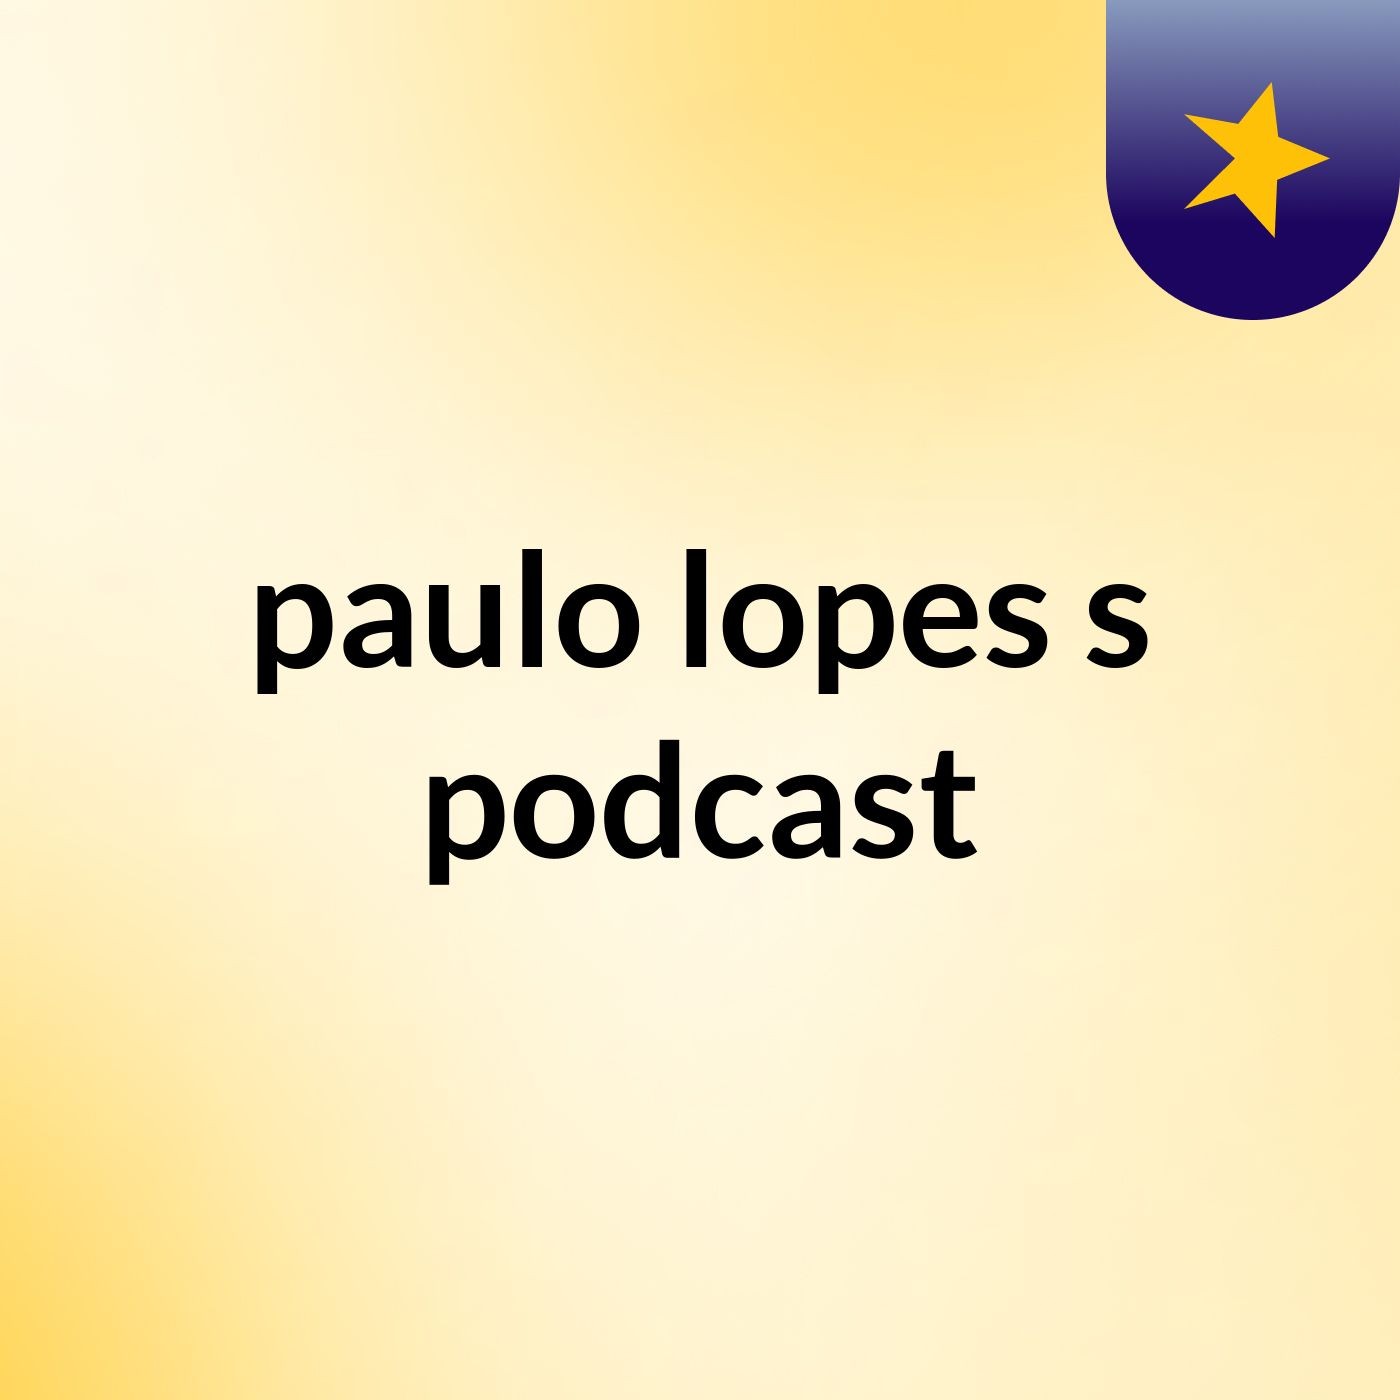 paulo lopes's podcast